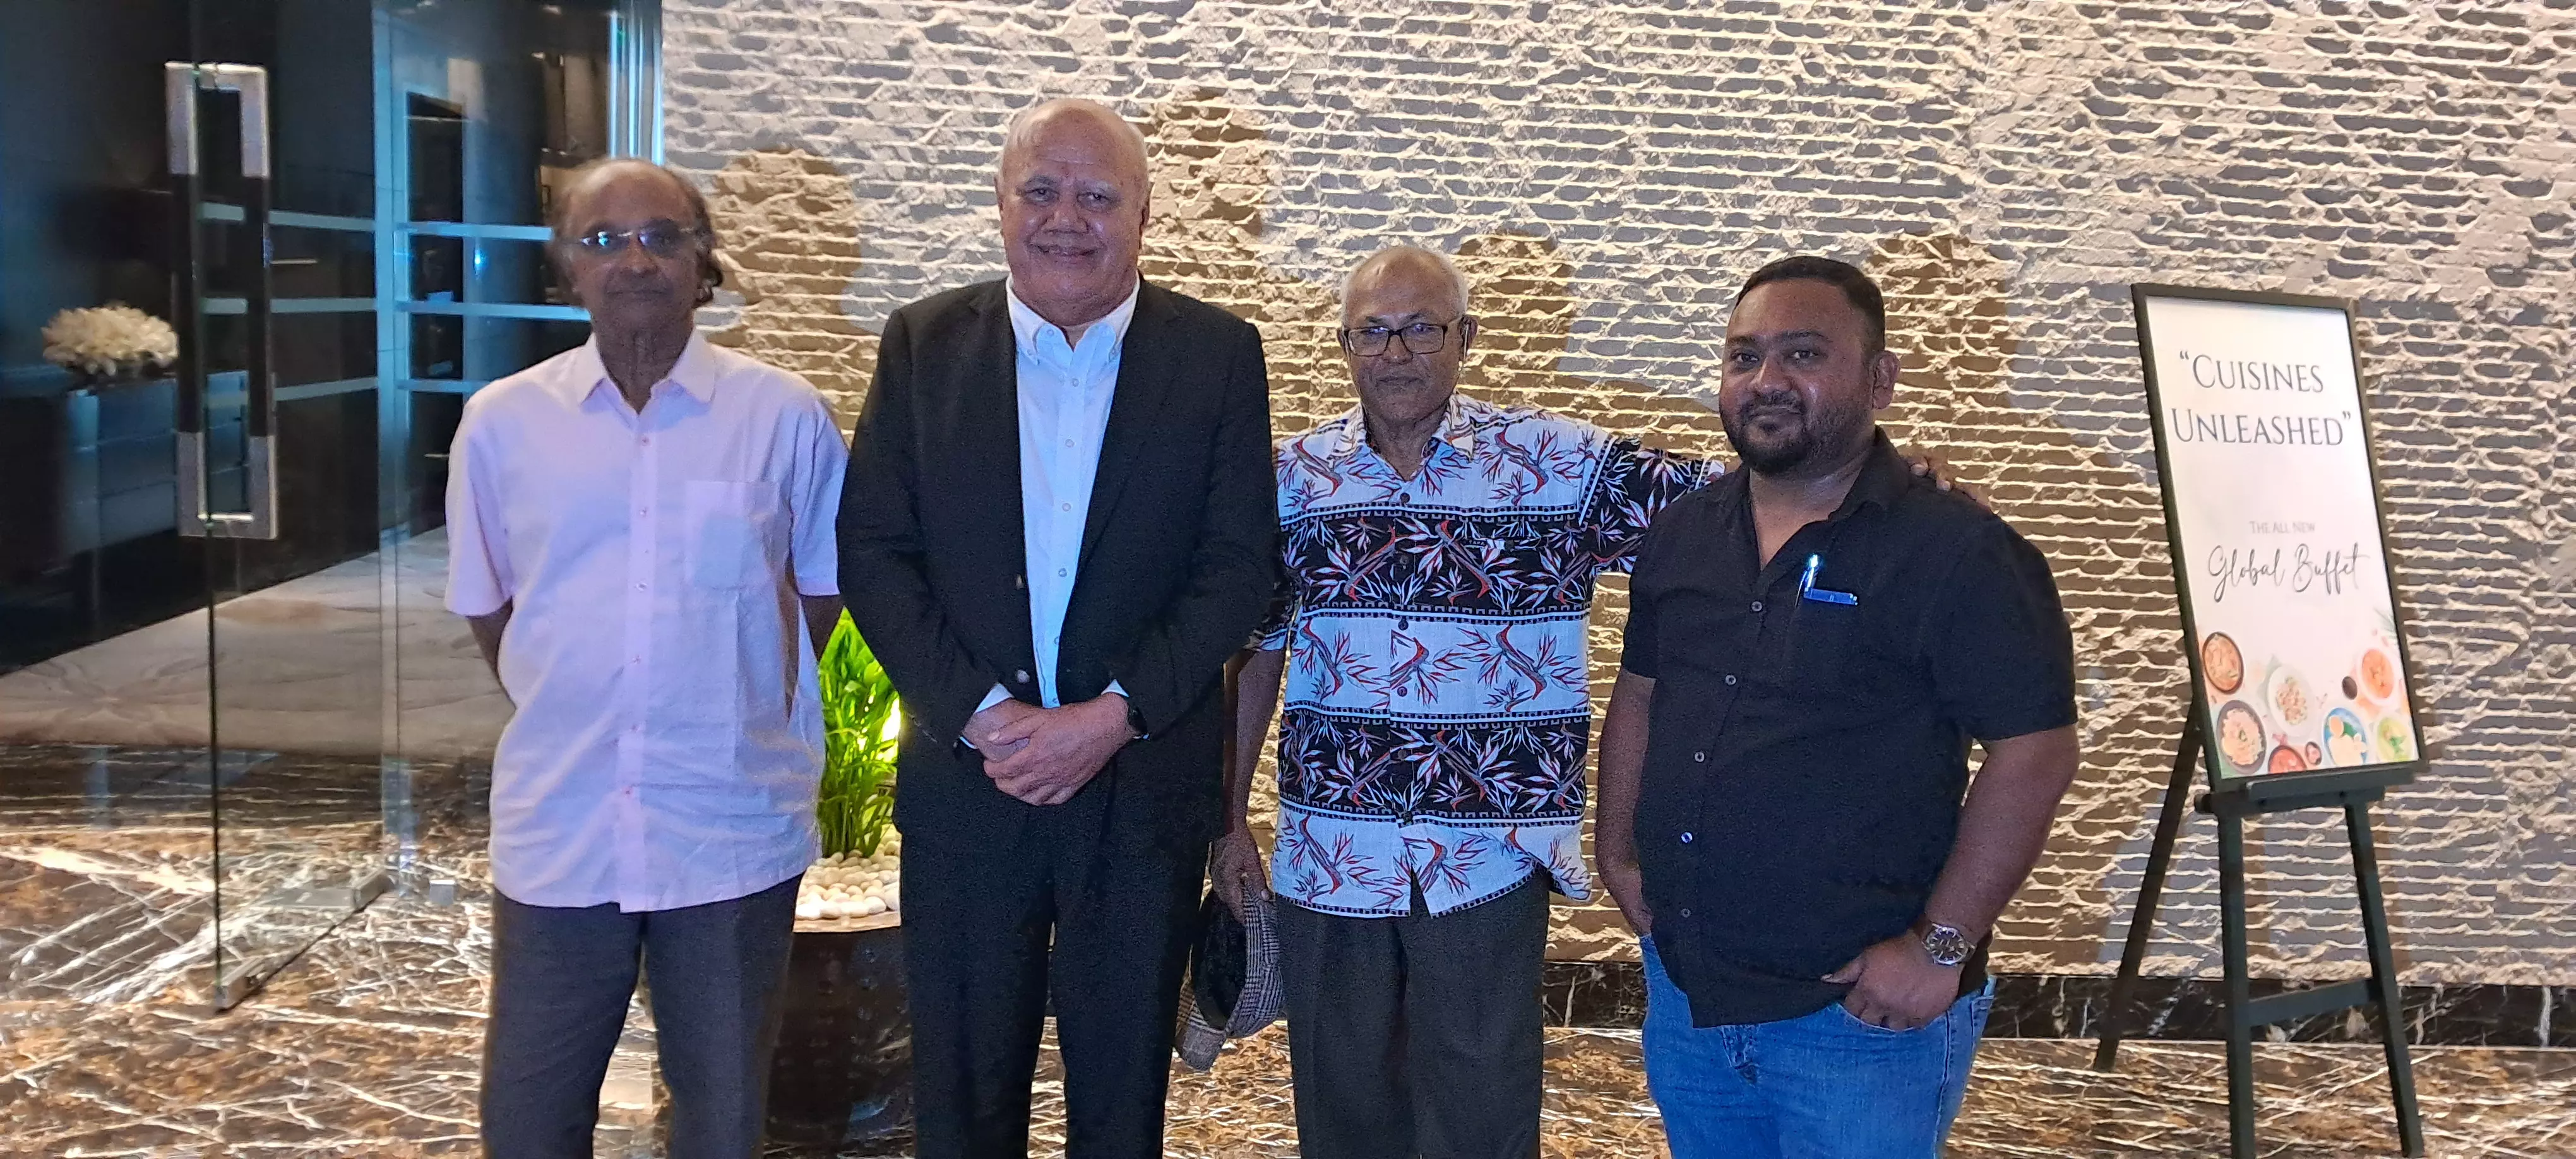 Fiji looks to capitalise on Maldives faux pas, lure Indian tourists to archipelago